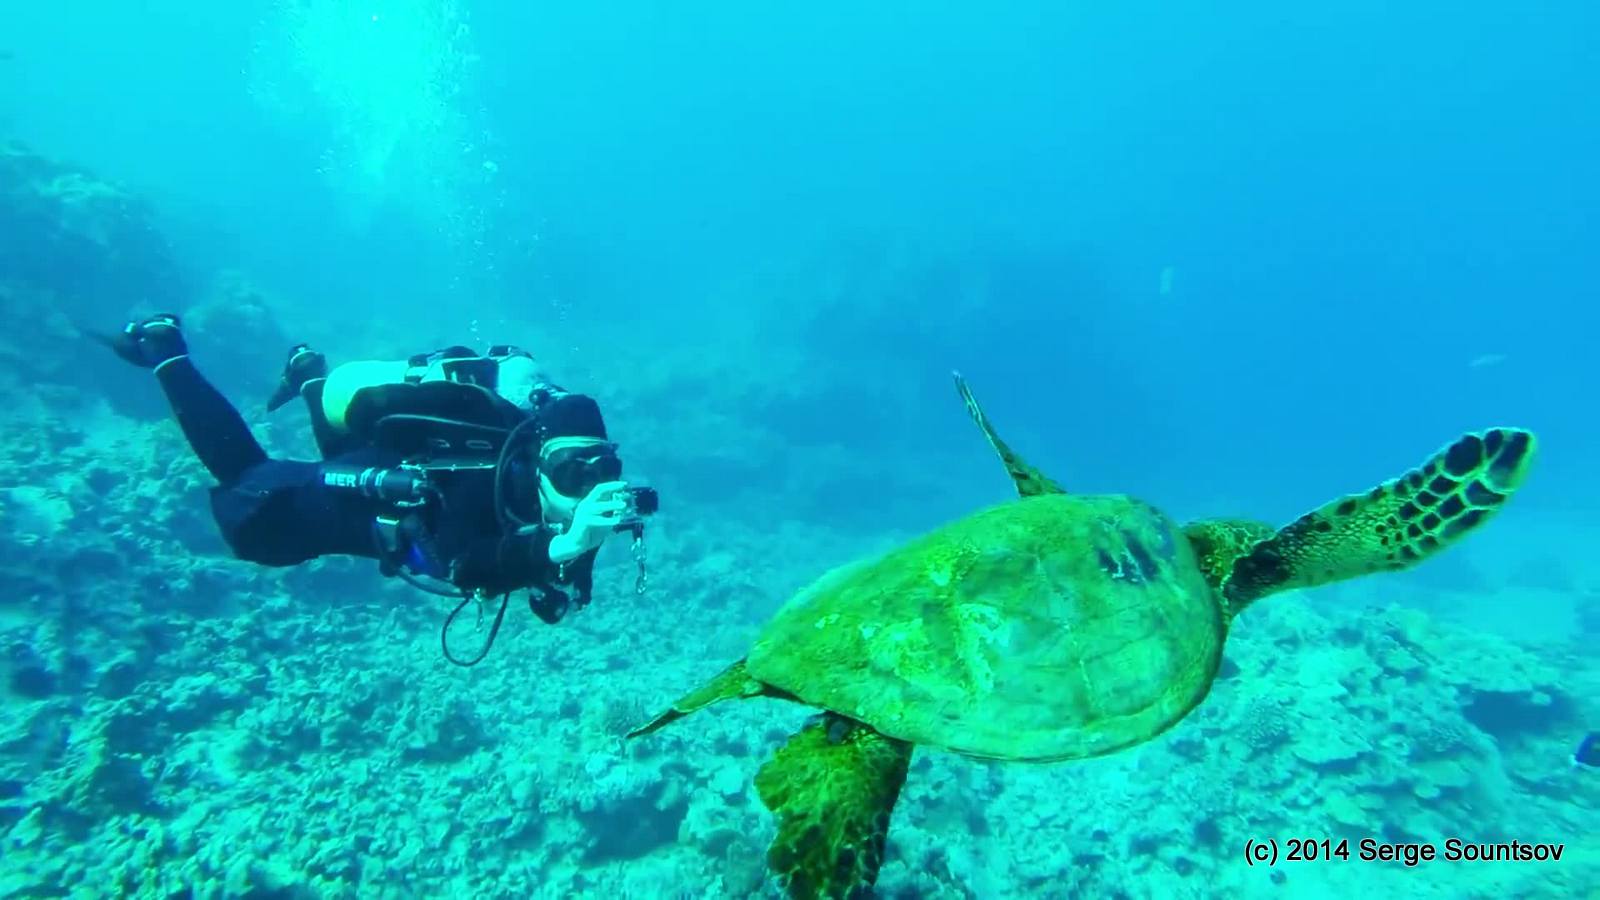 Mer videoing a turtle at Puako off Hawaii's Kona coast